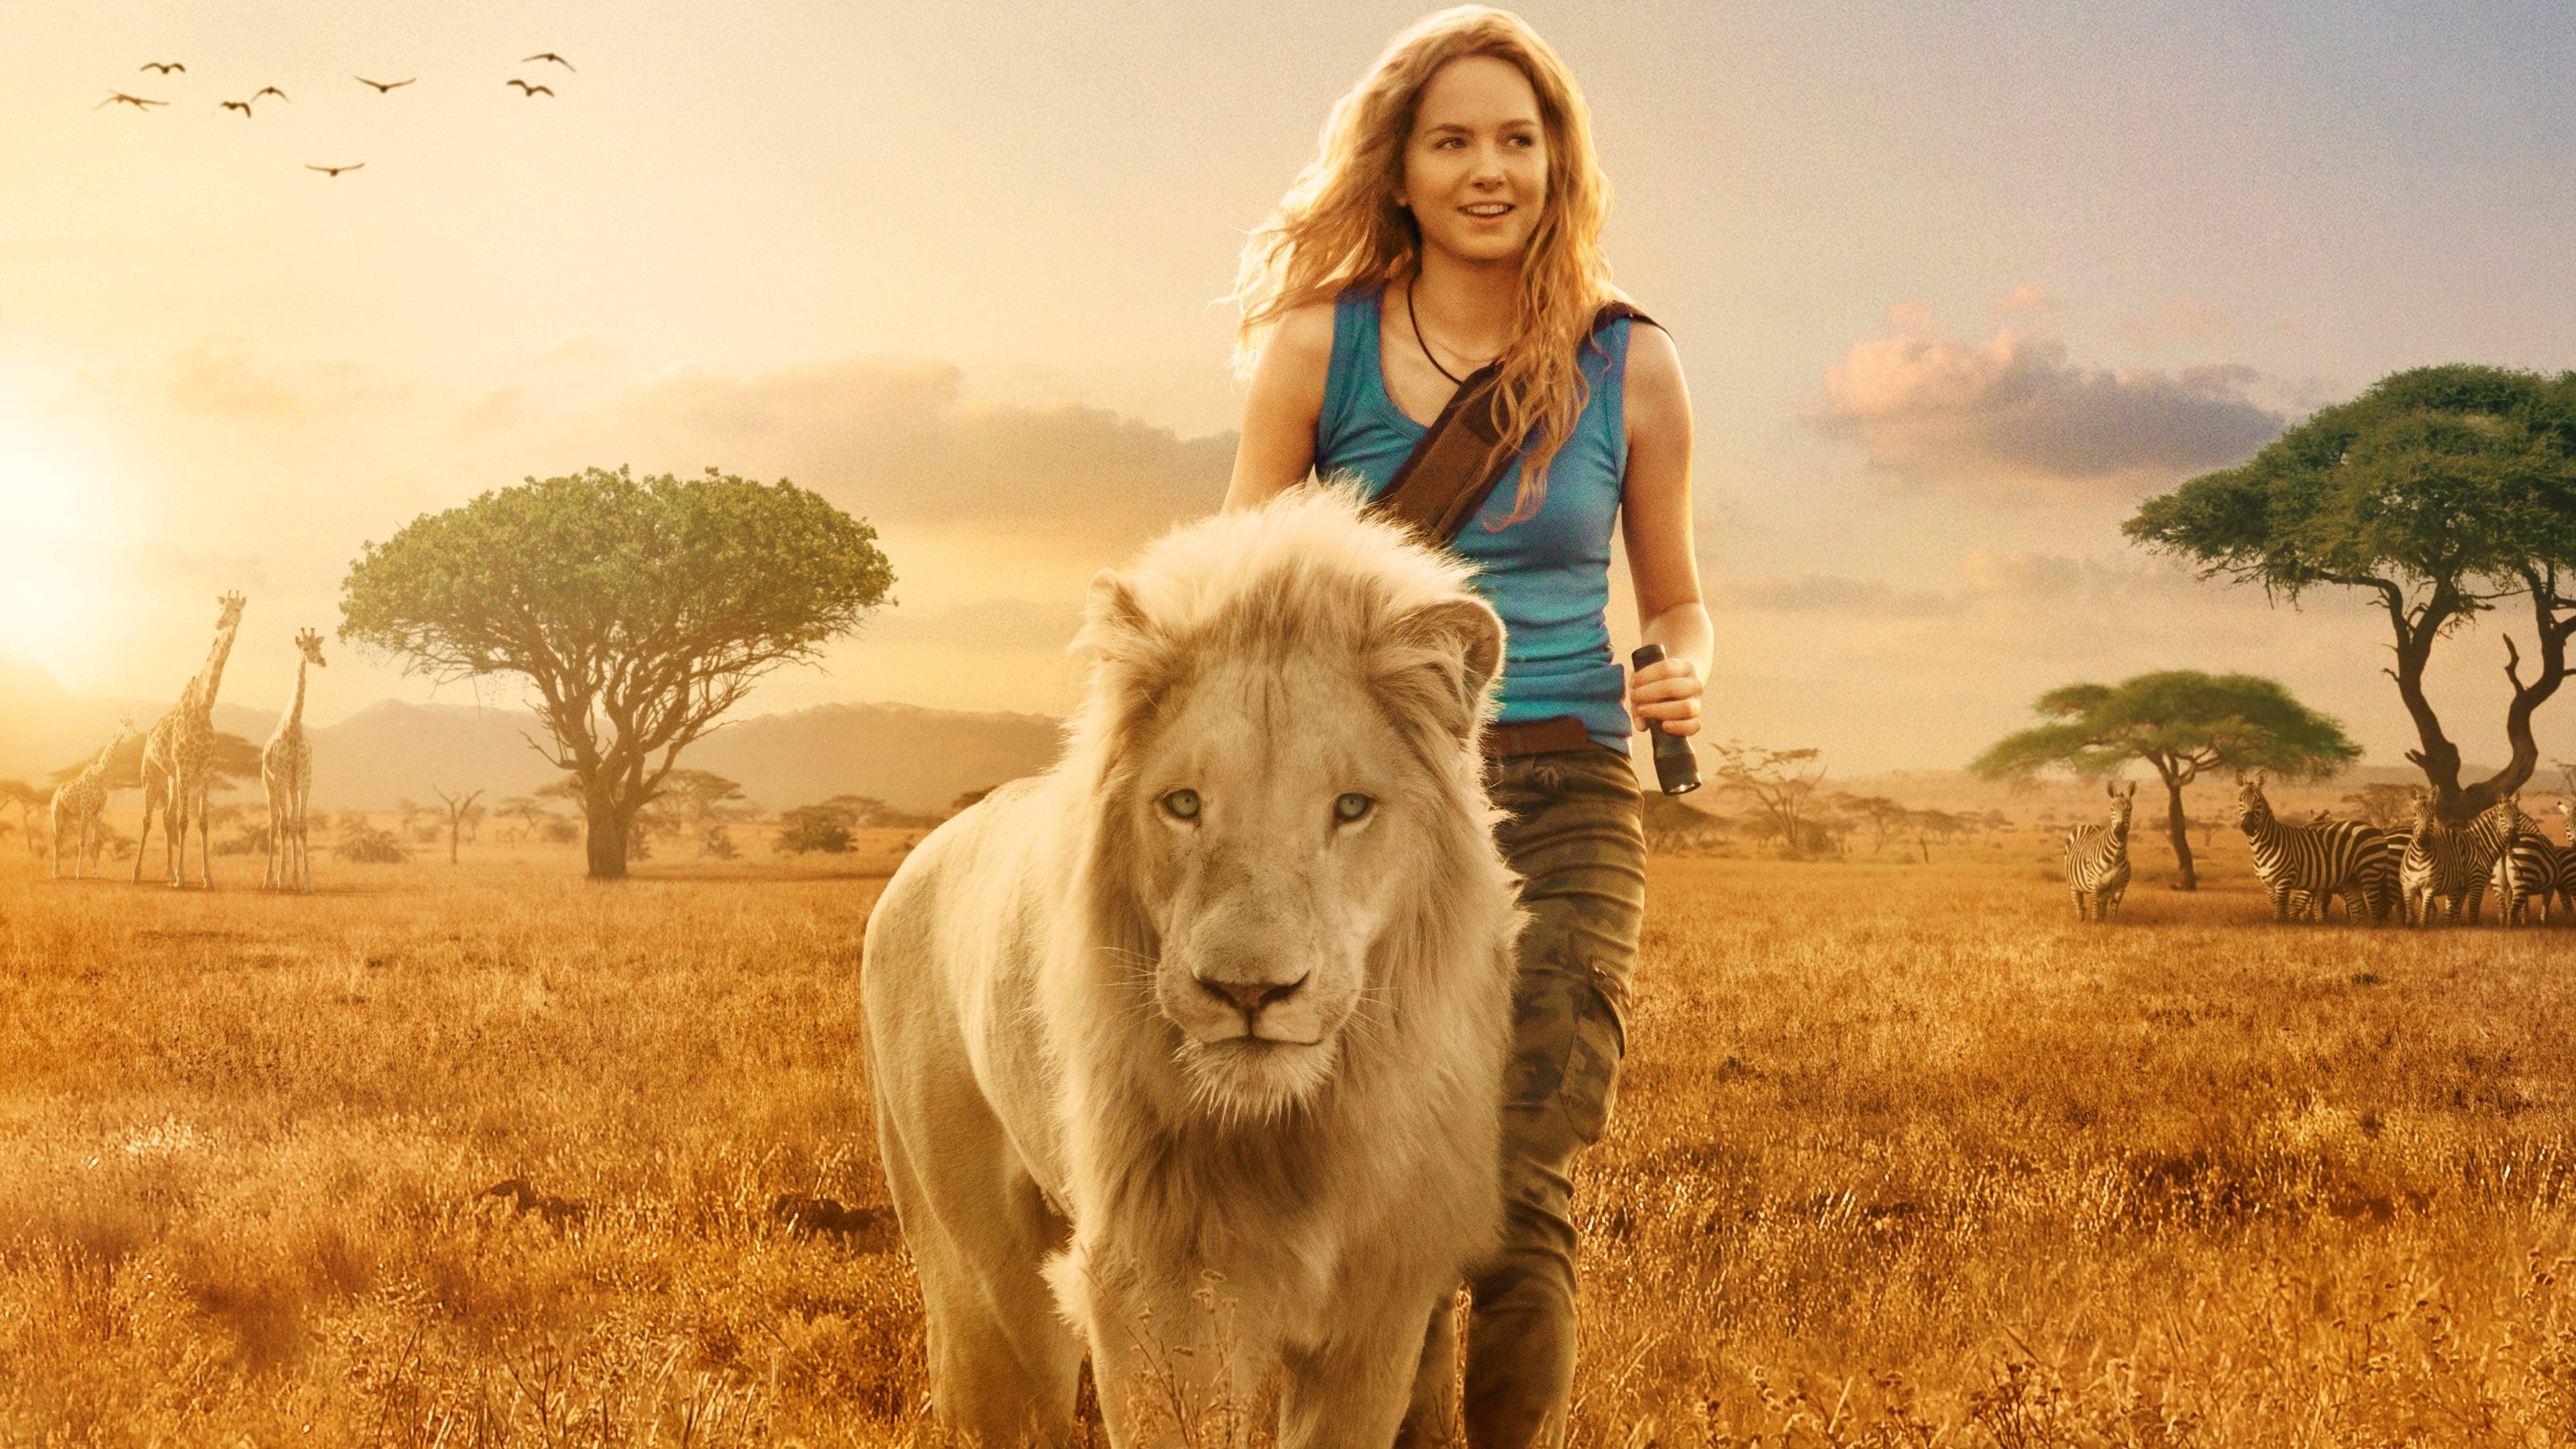 Mia and the White Lion backdrop